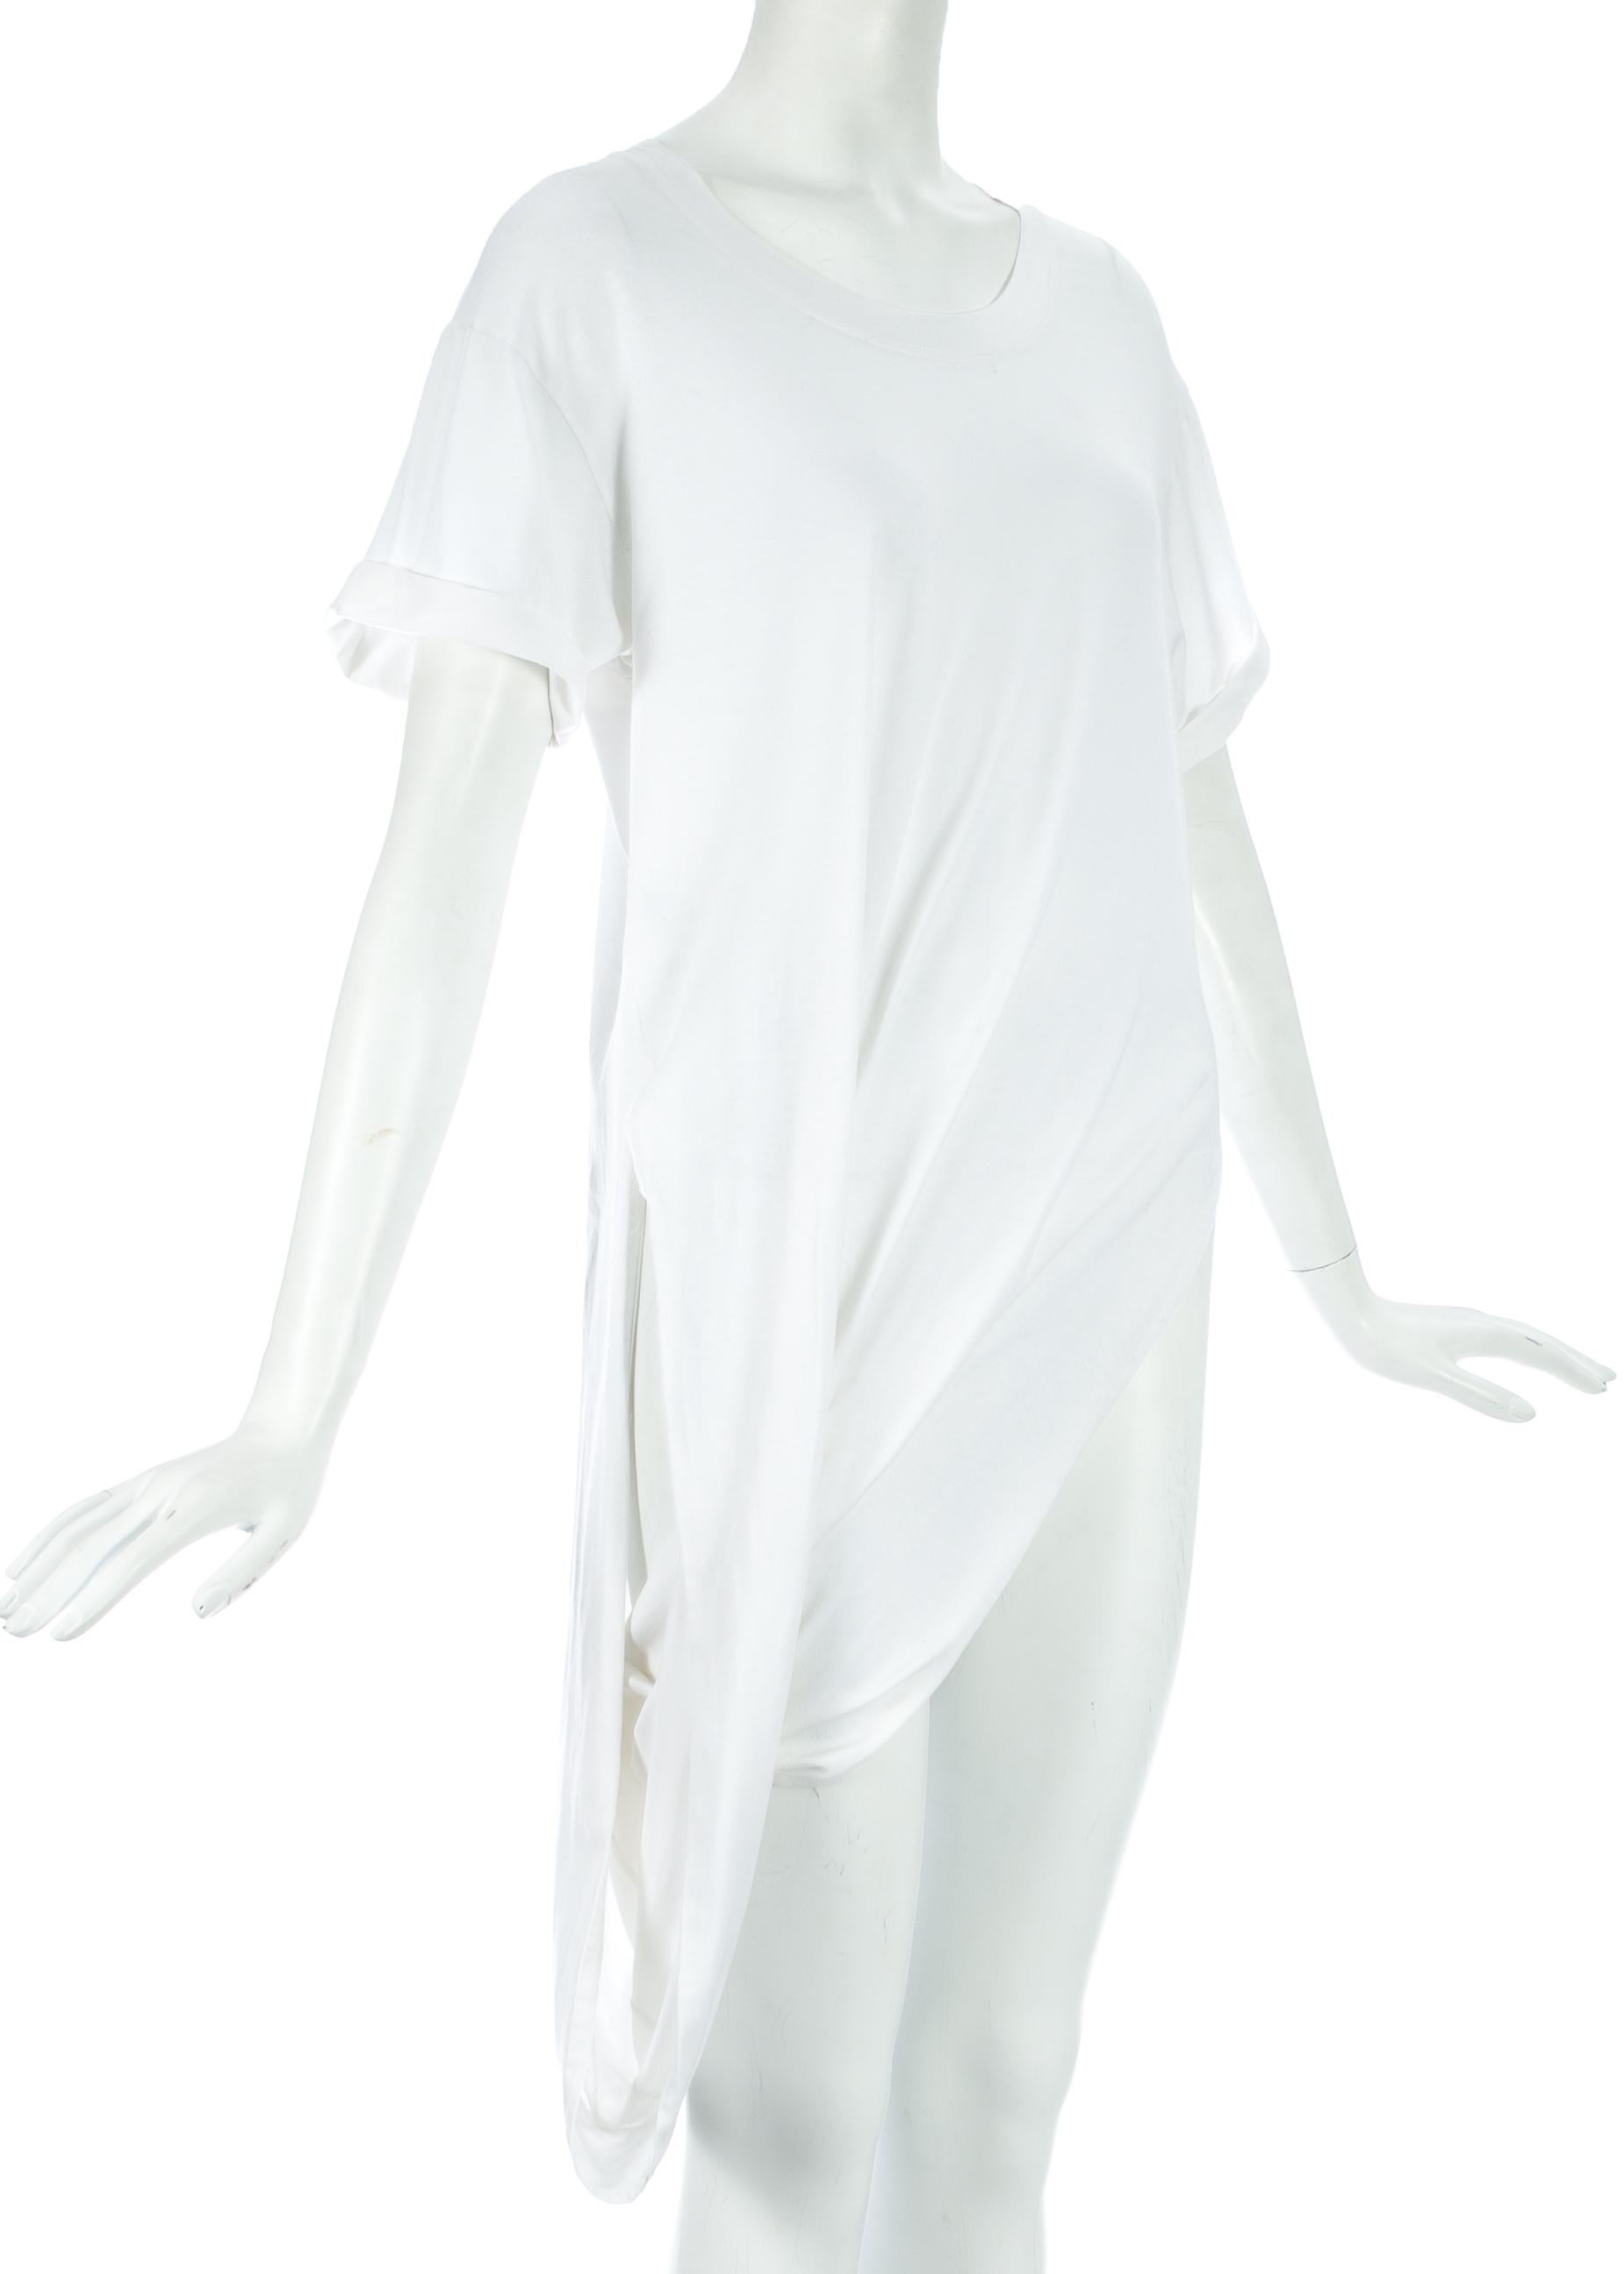 Margiela white cotton draped t-shirt

c. 2000s